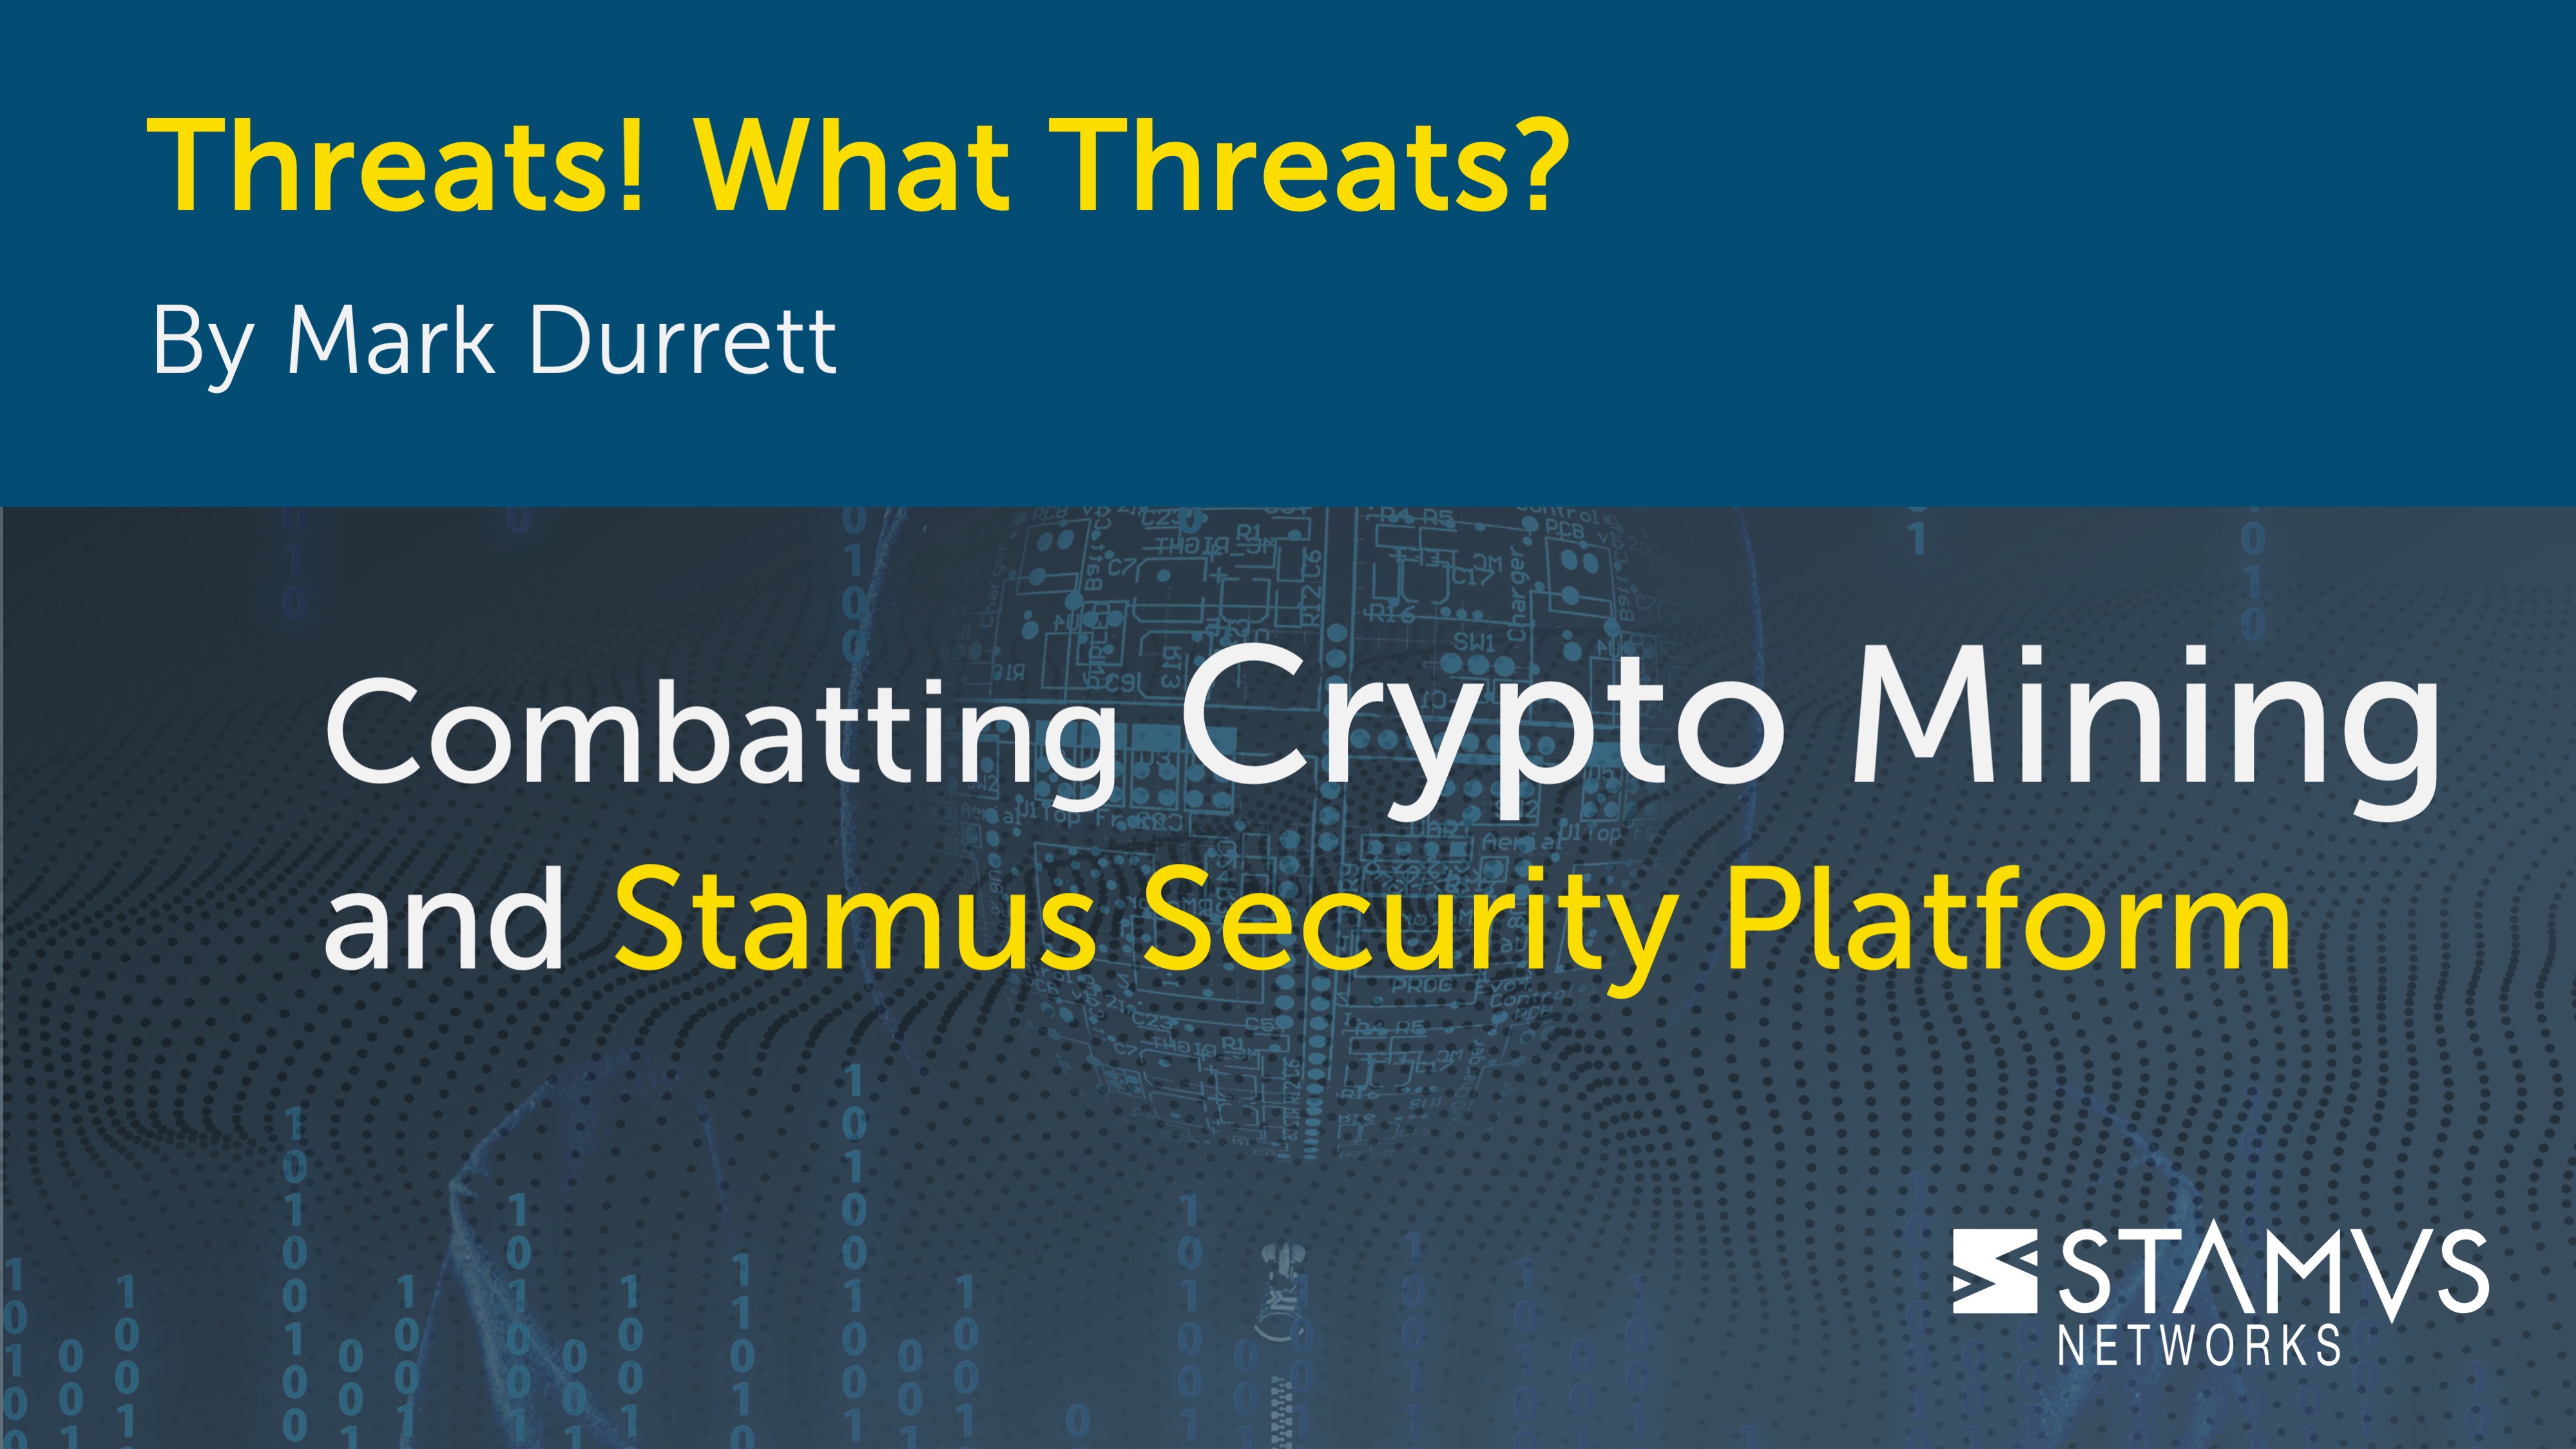 Threats! What Threats? Combatting Crypto Mining and Stamus Security Platform